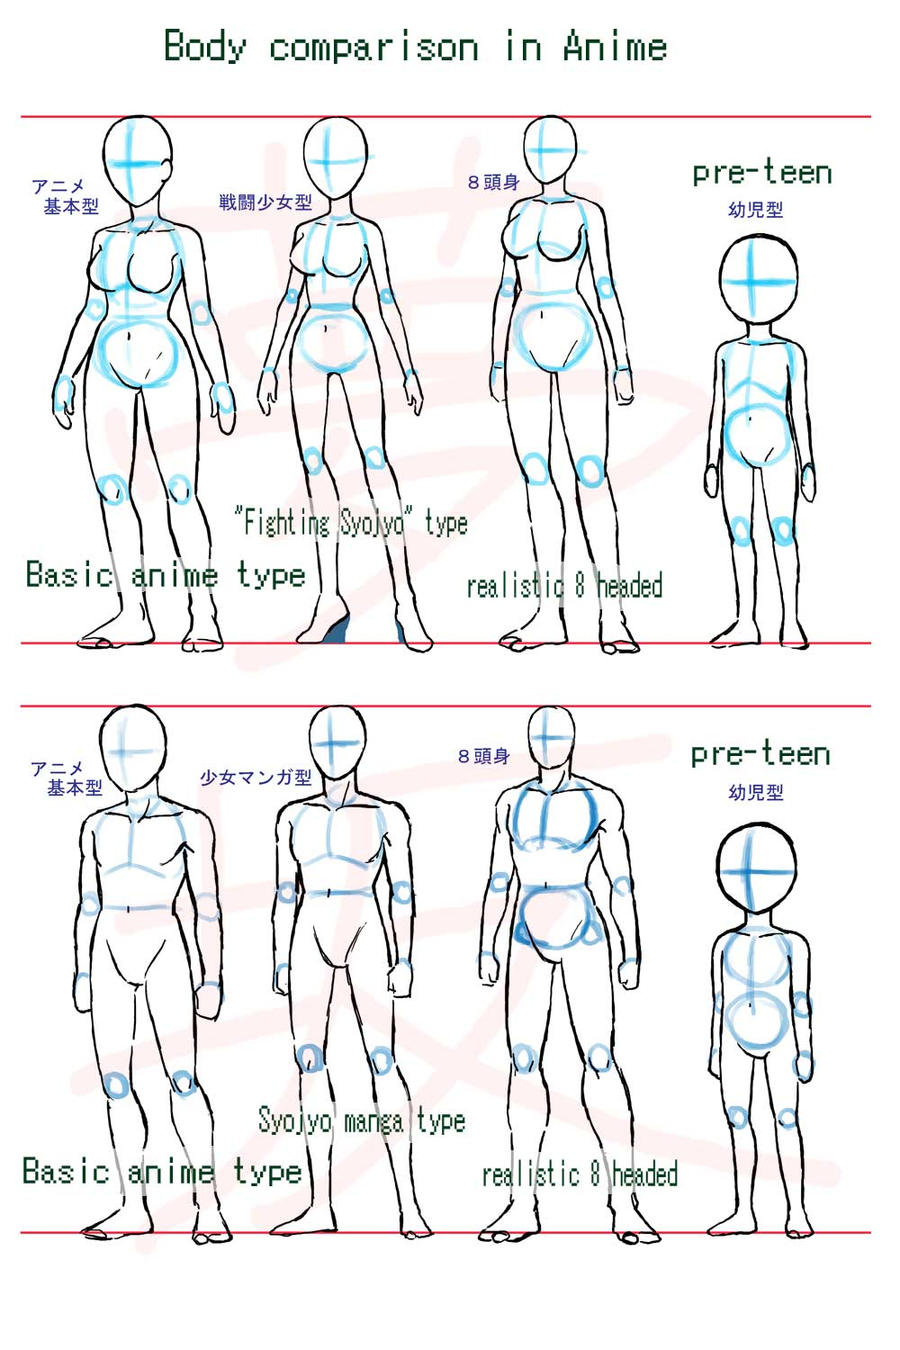 Anime body style comparison